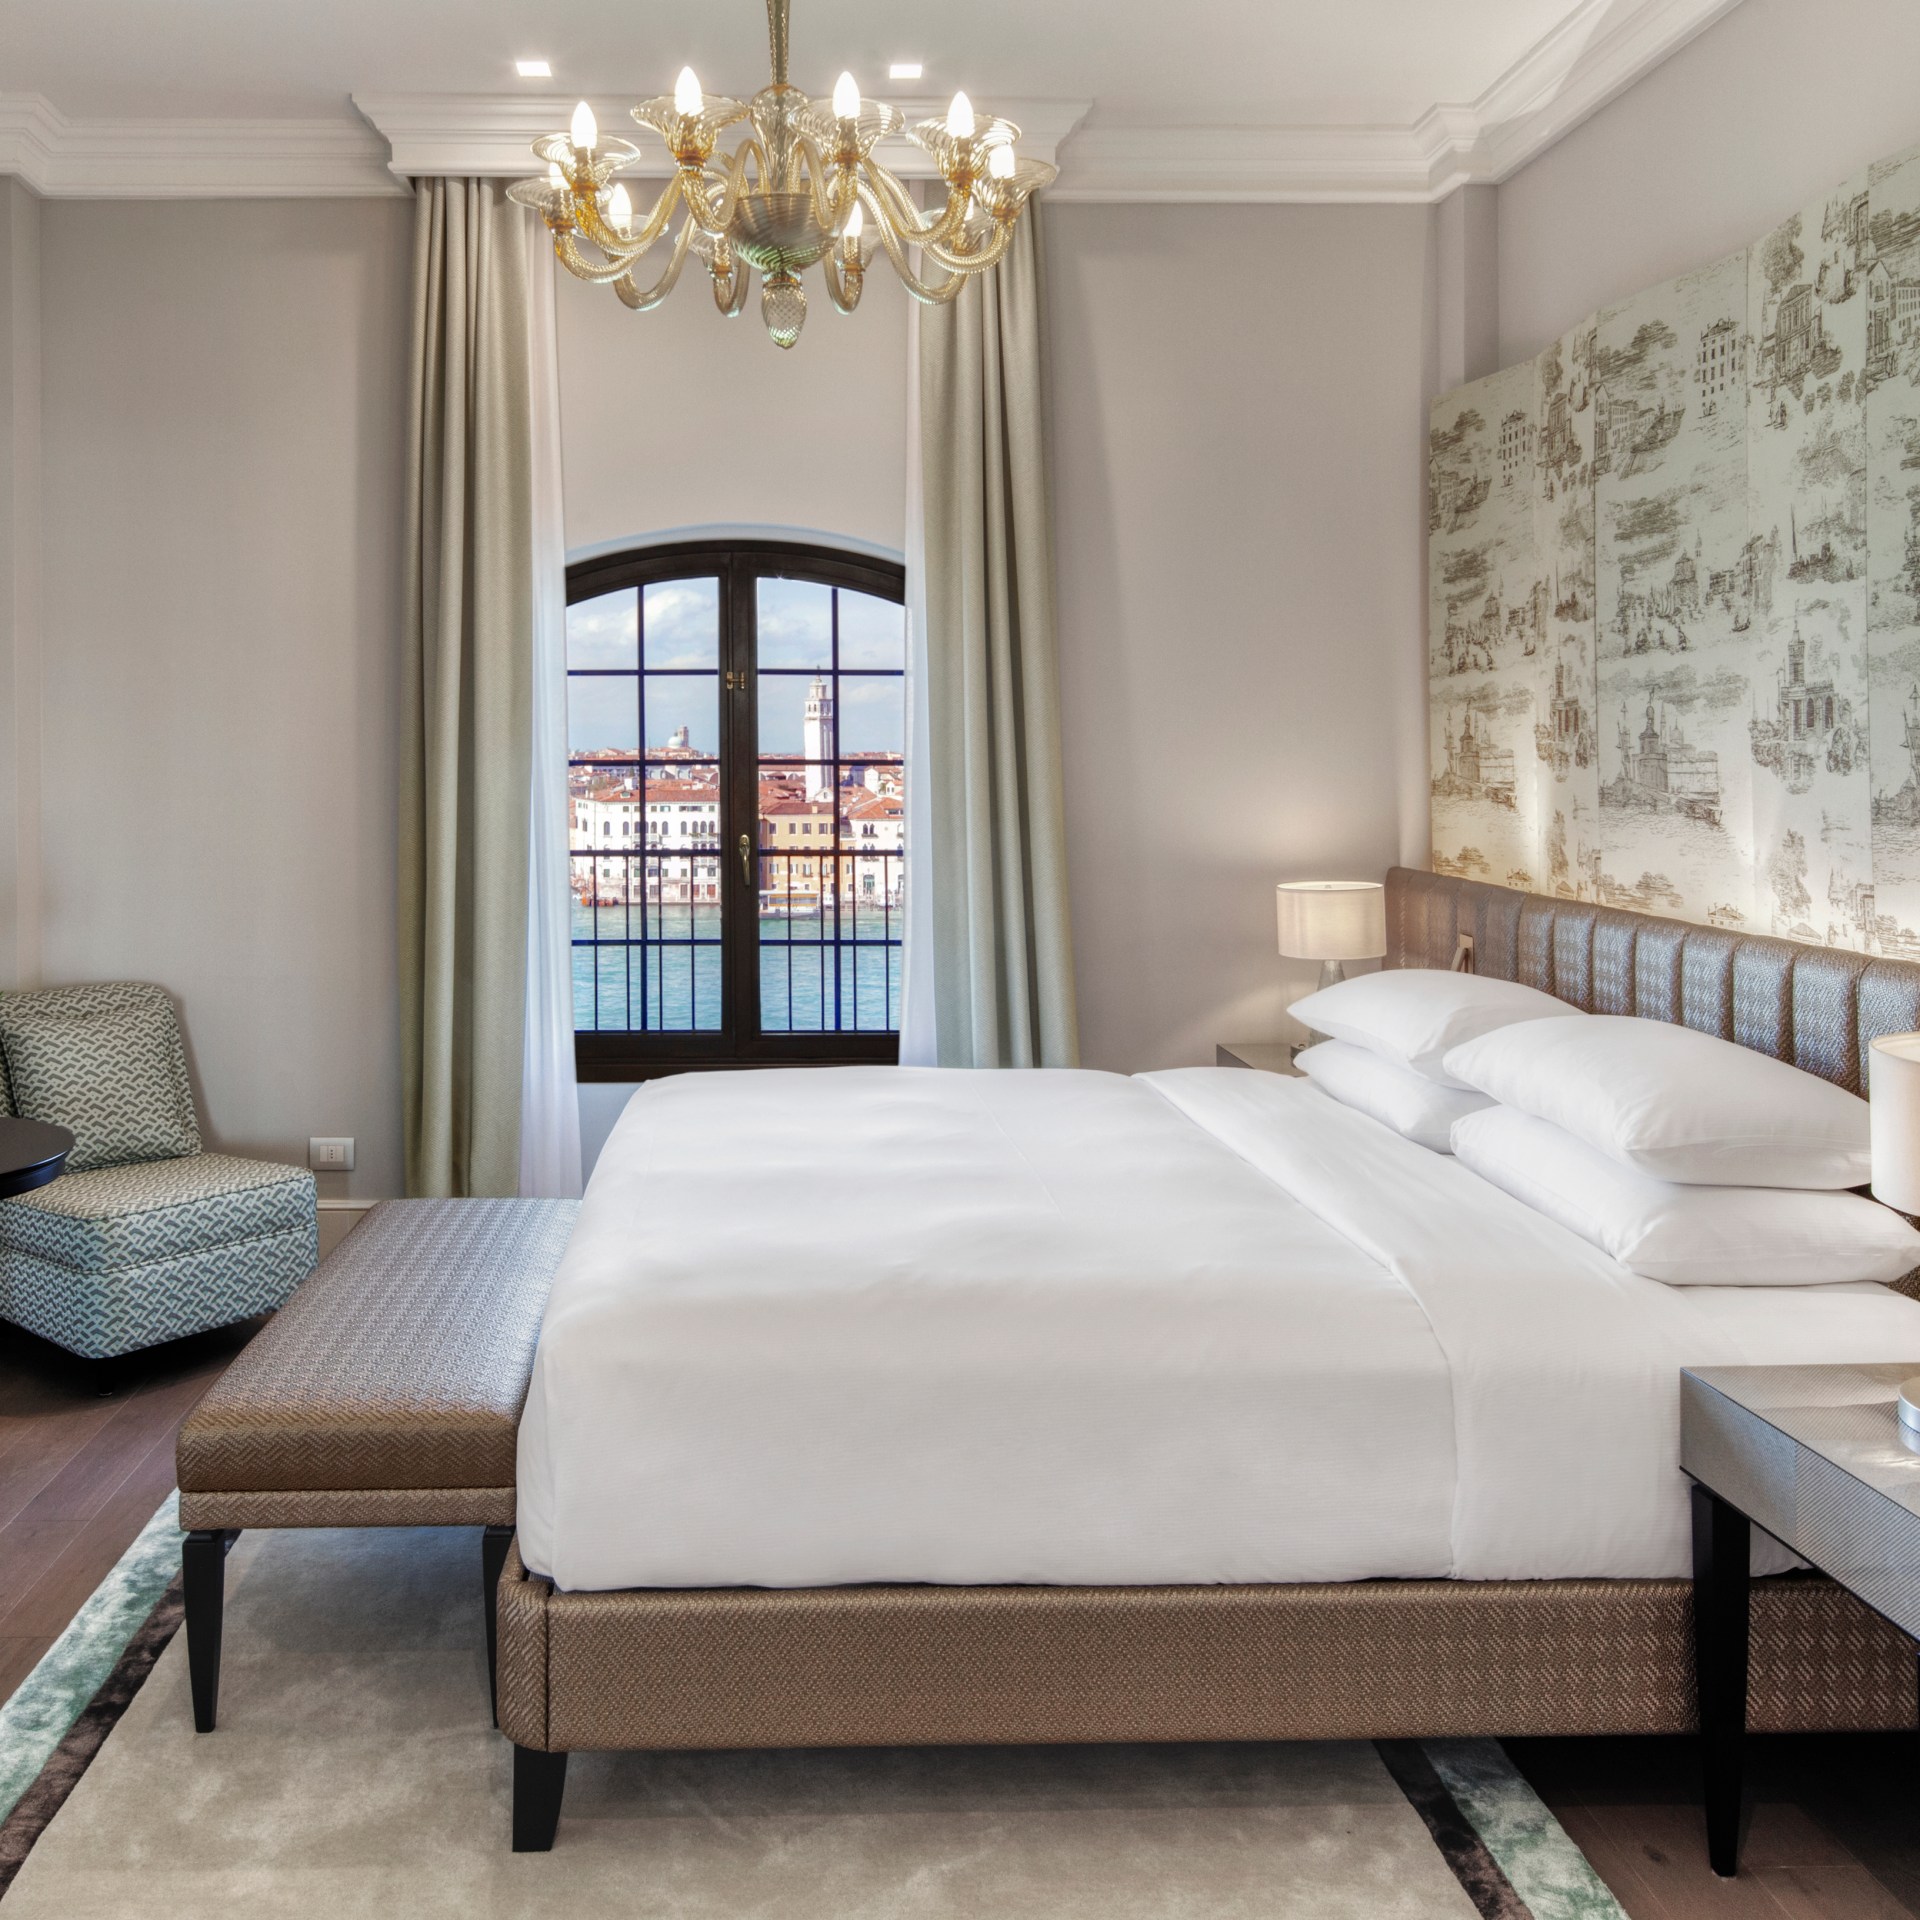 Hilton Molino Stucky Venice - Executive Suite with view